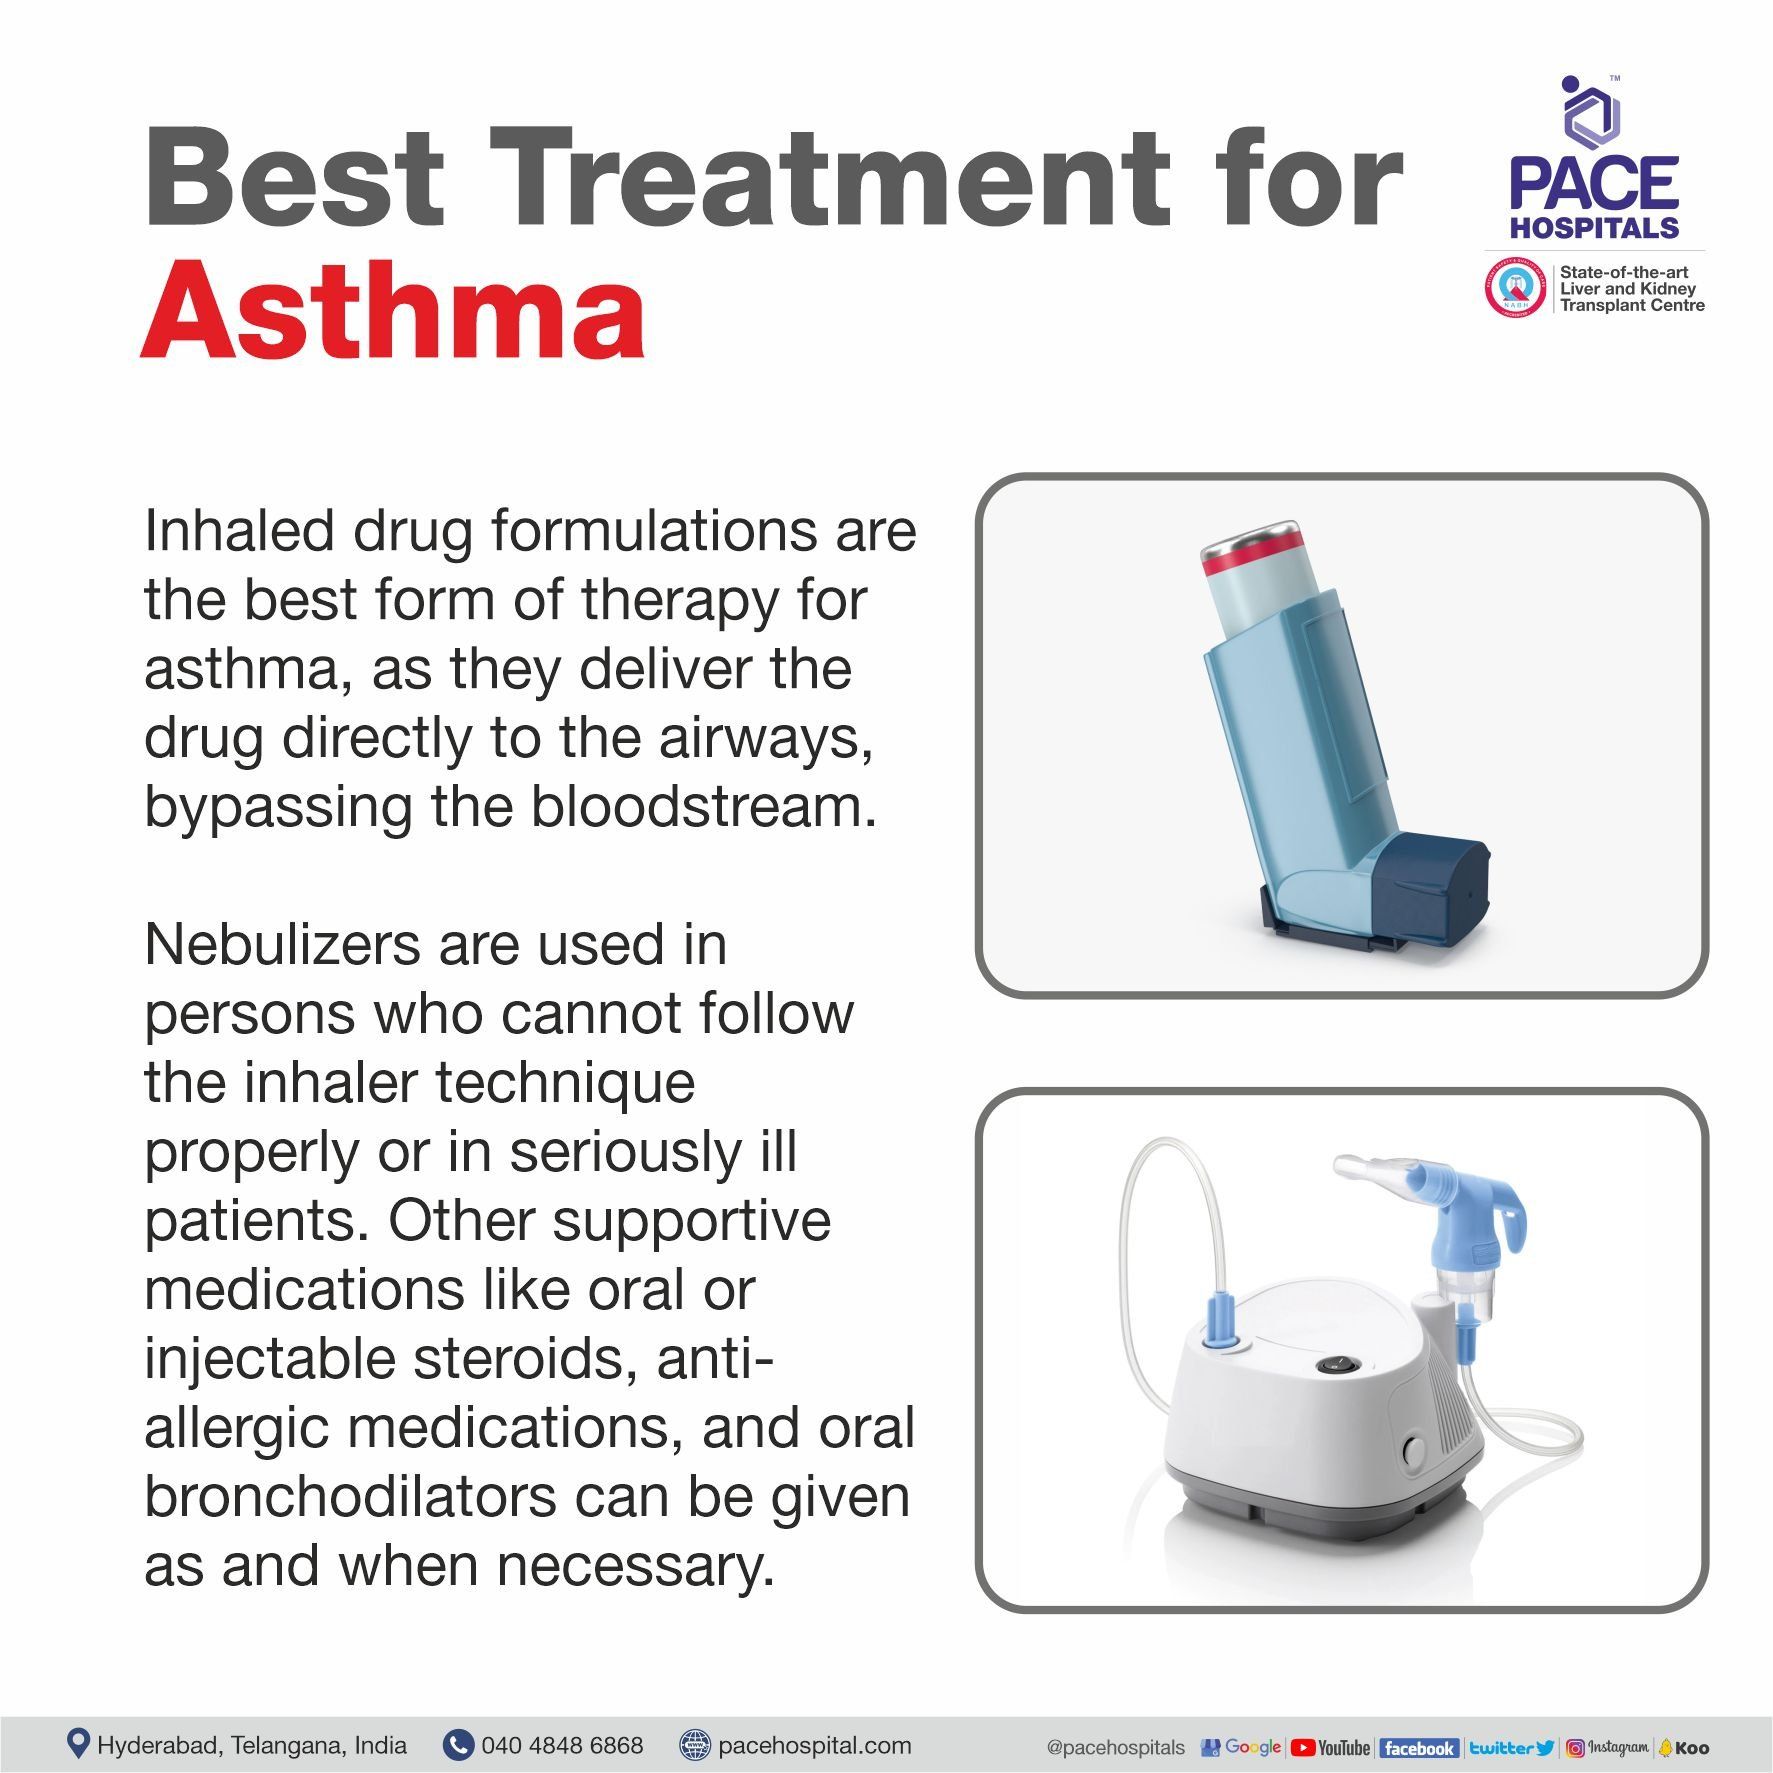 best treatment for asthma, bronchial asthma